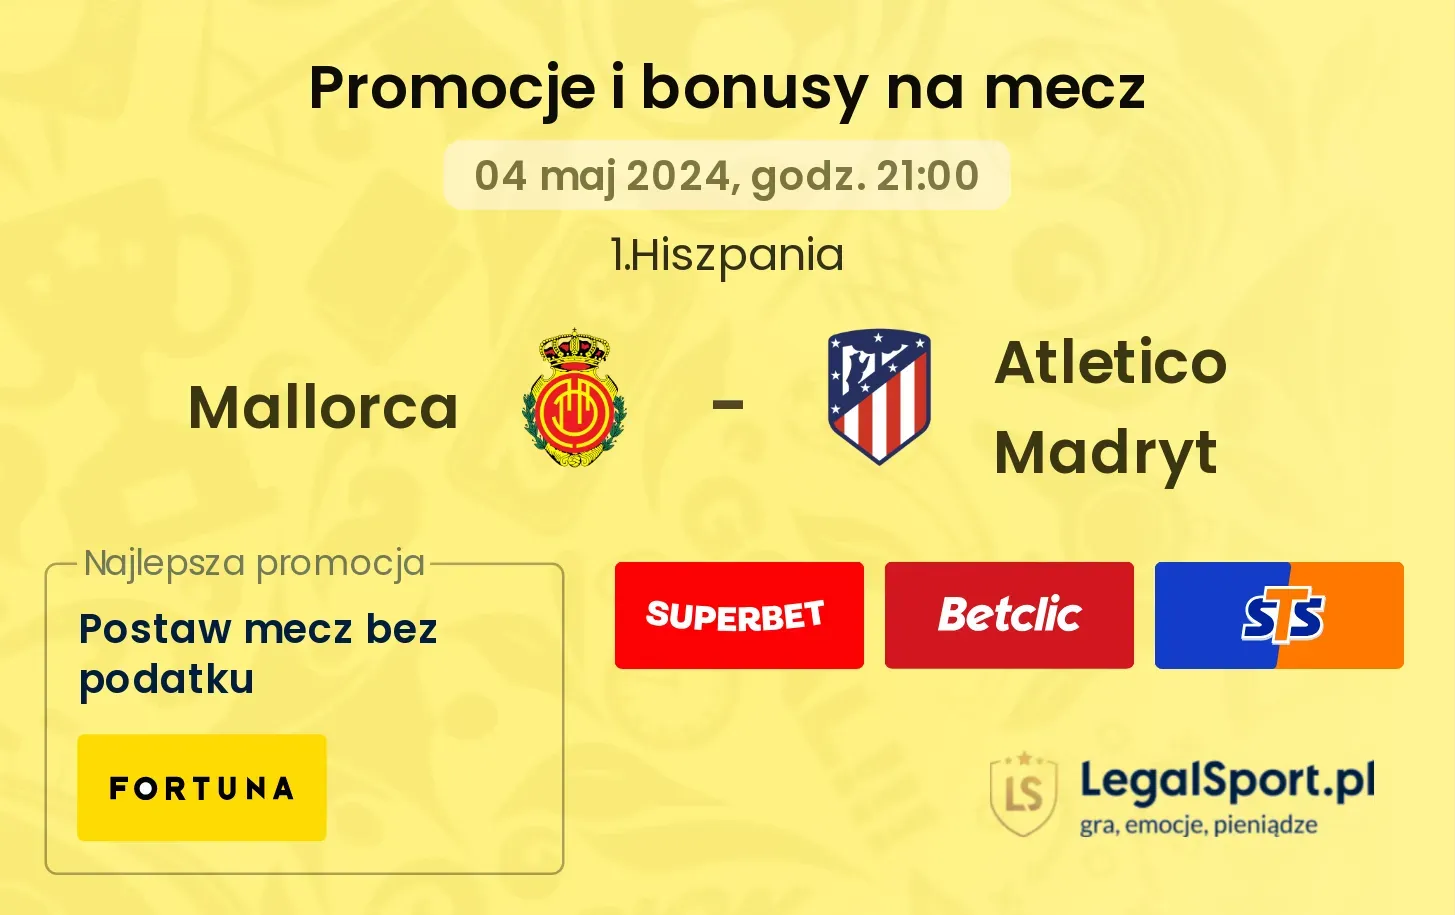 Mallorca - Atletico Madryt bonusy i promocje (04.05, 21:00)